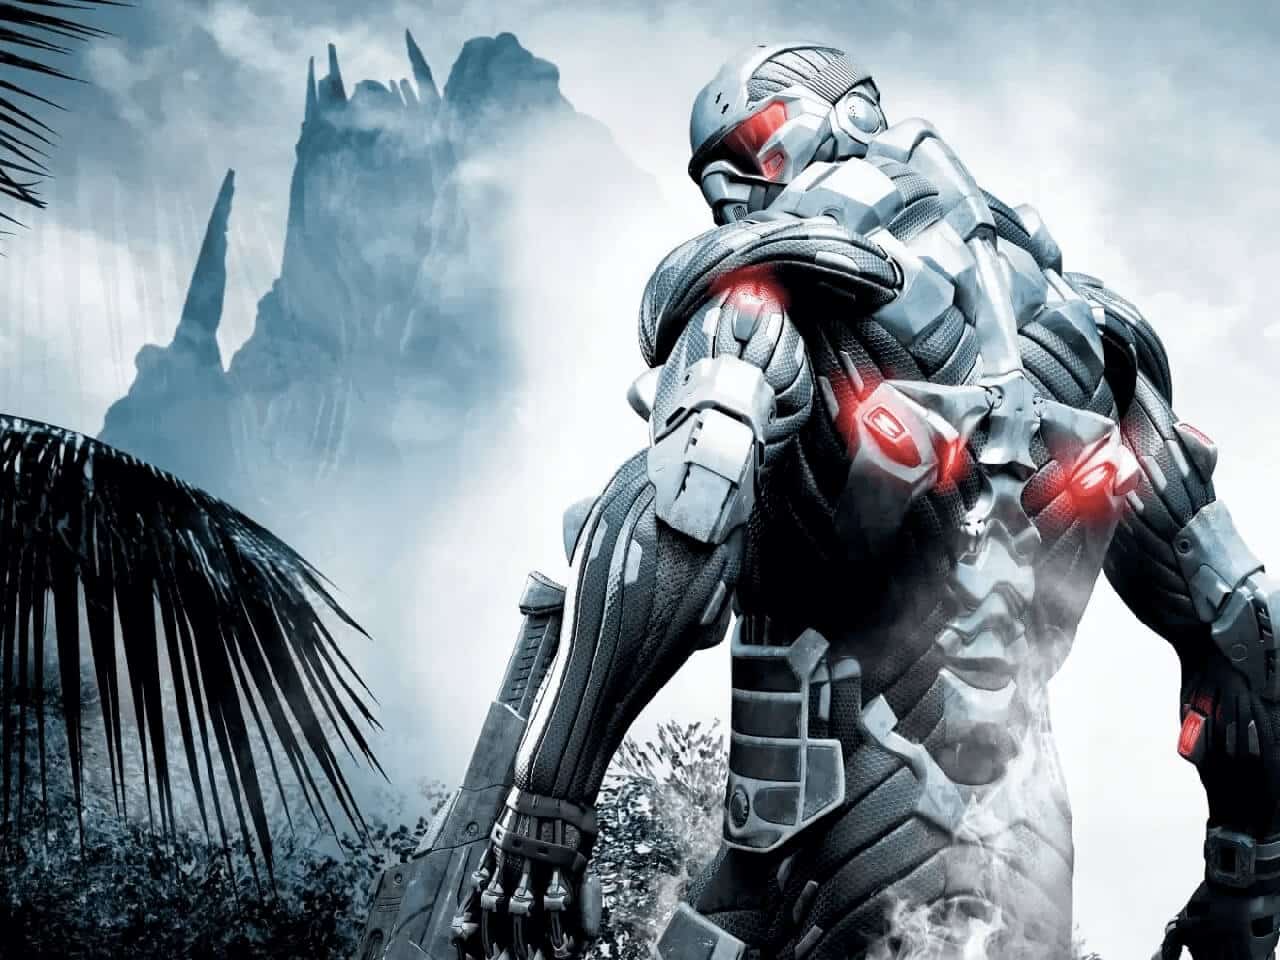 Crysis 4 Officially Announced!